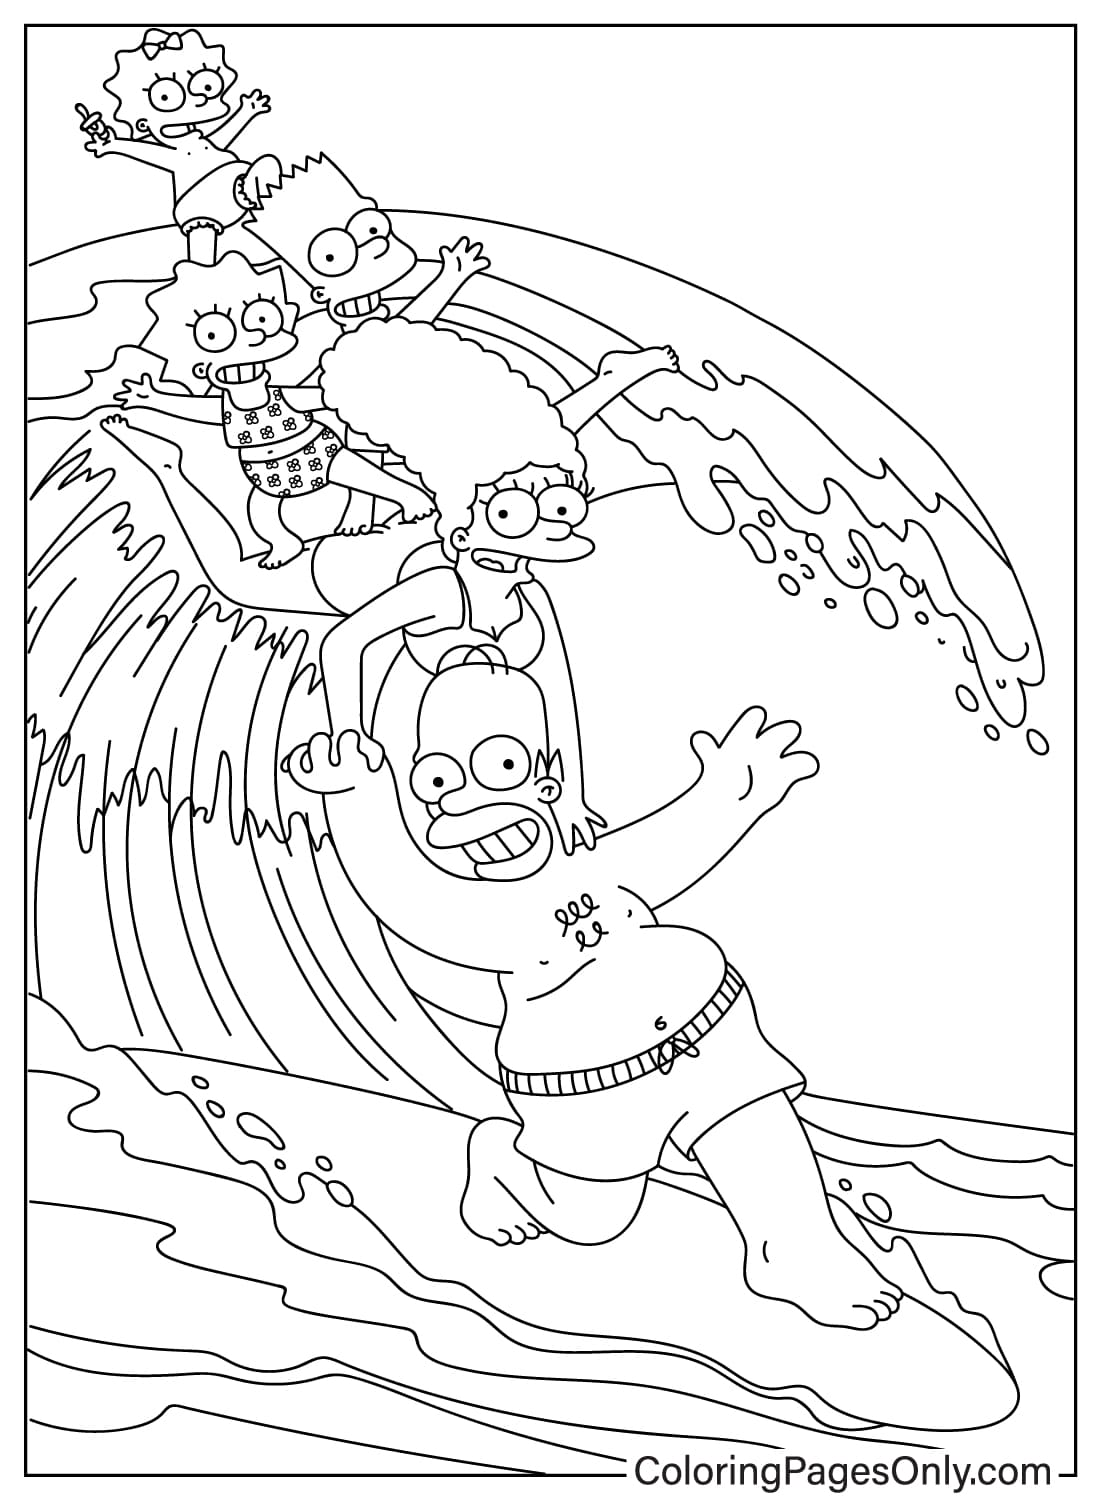 Simpsons-Malseite von Simpsons